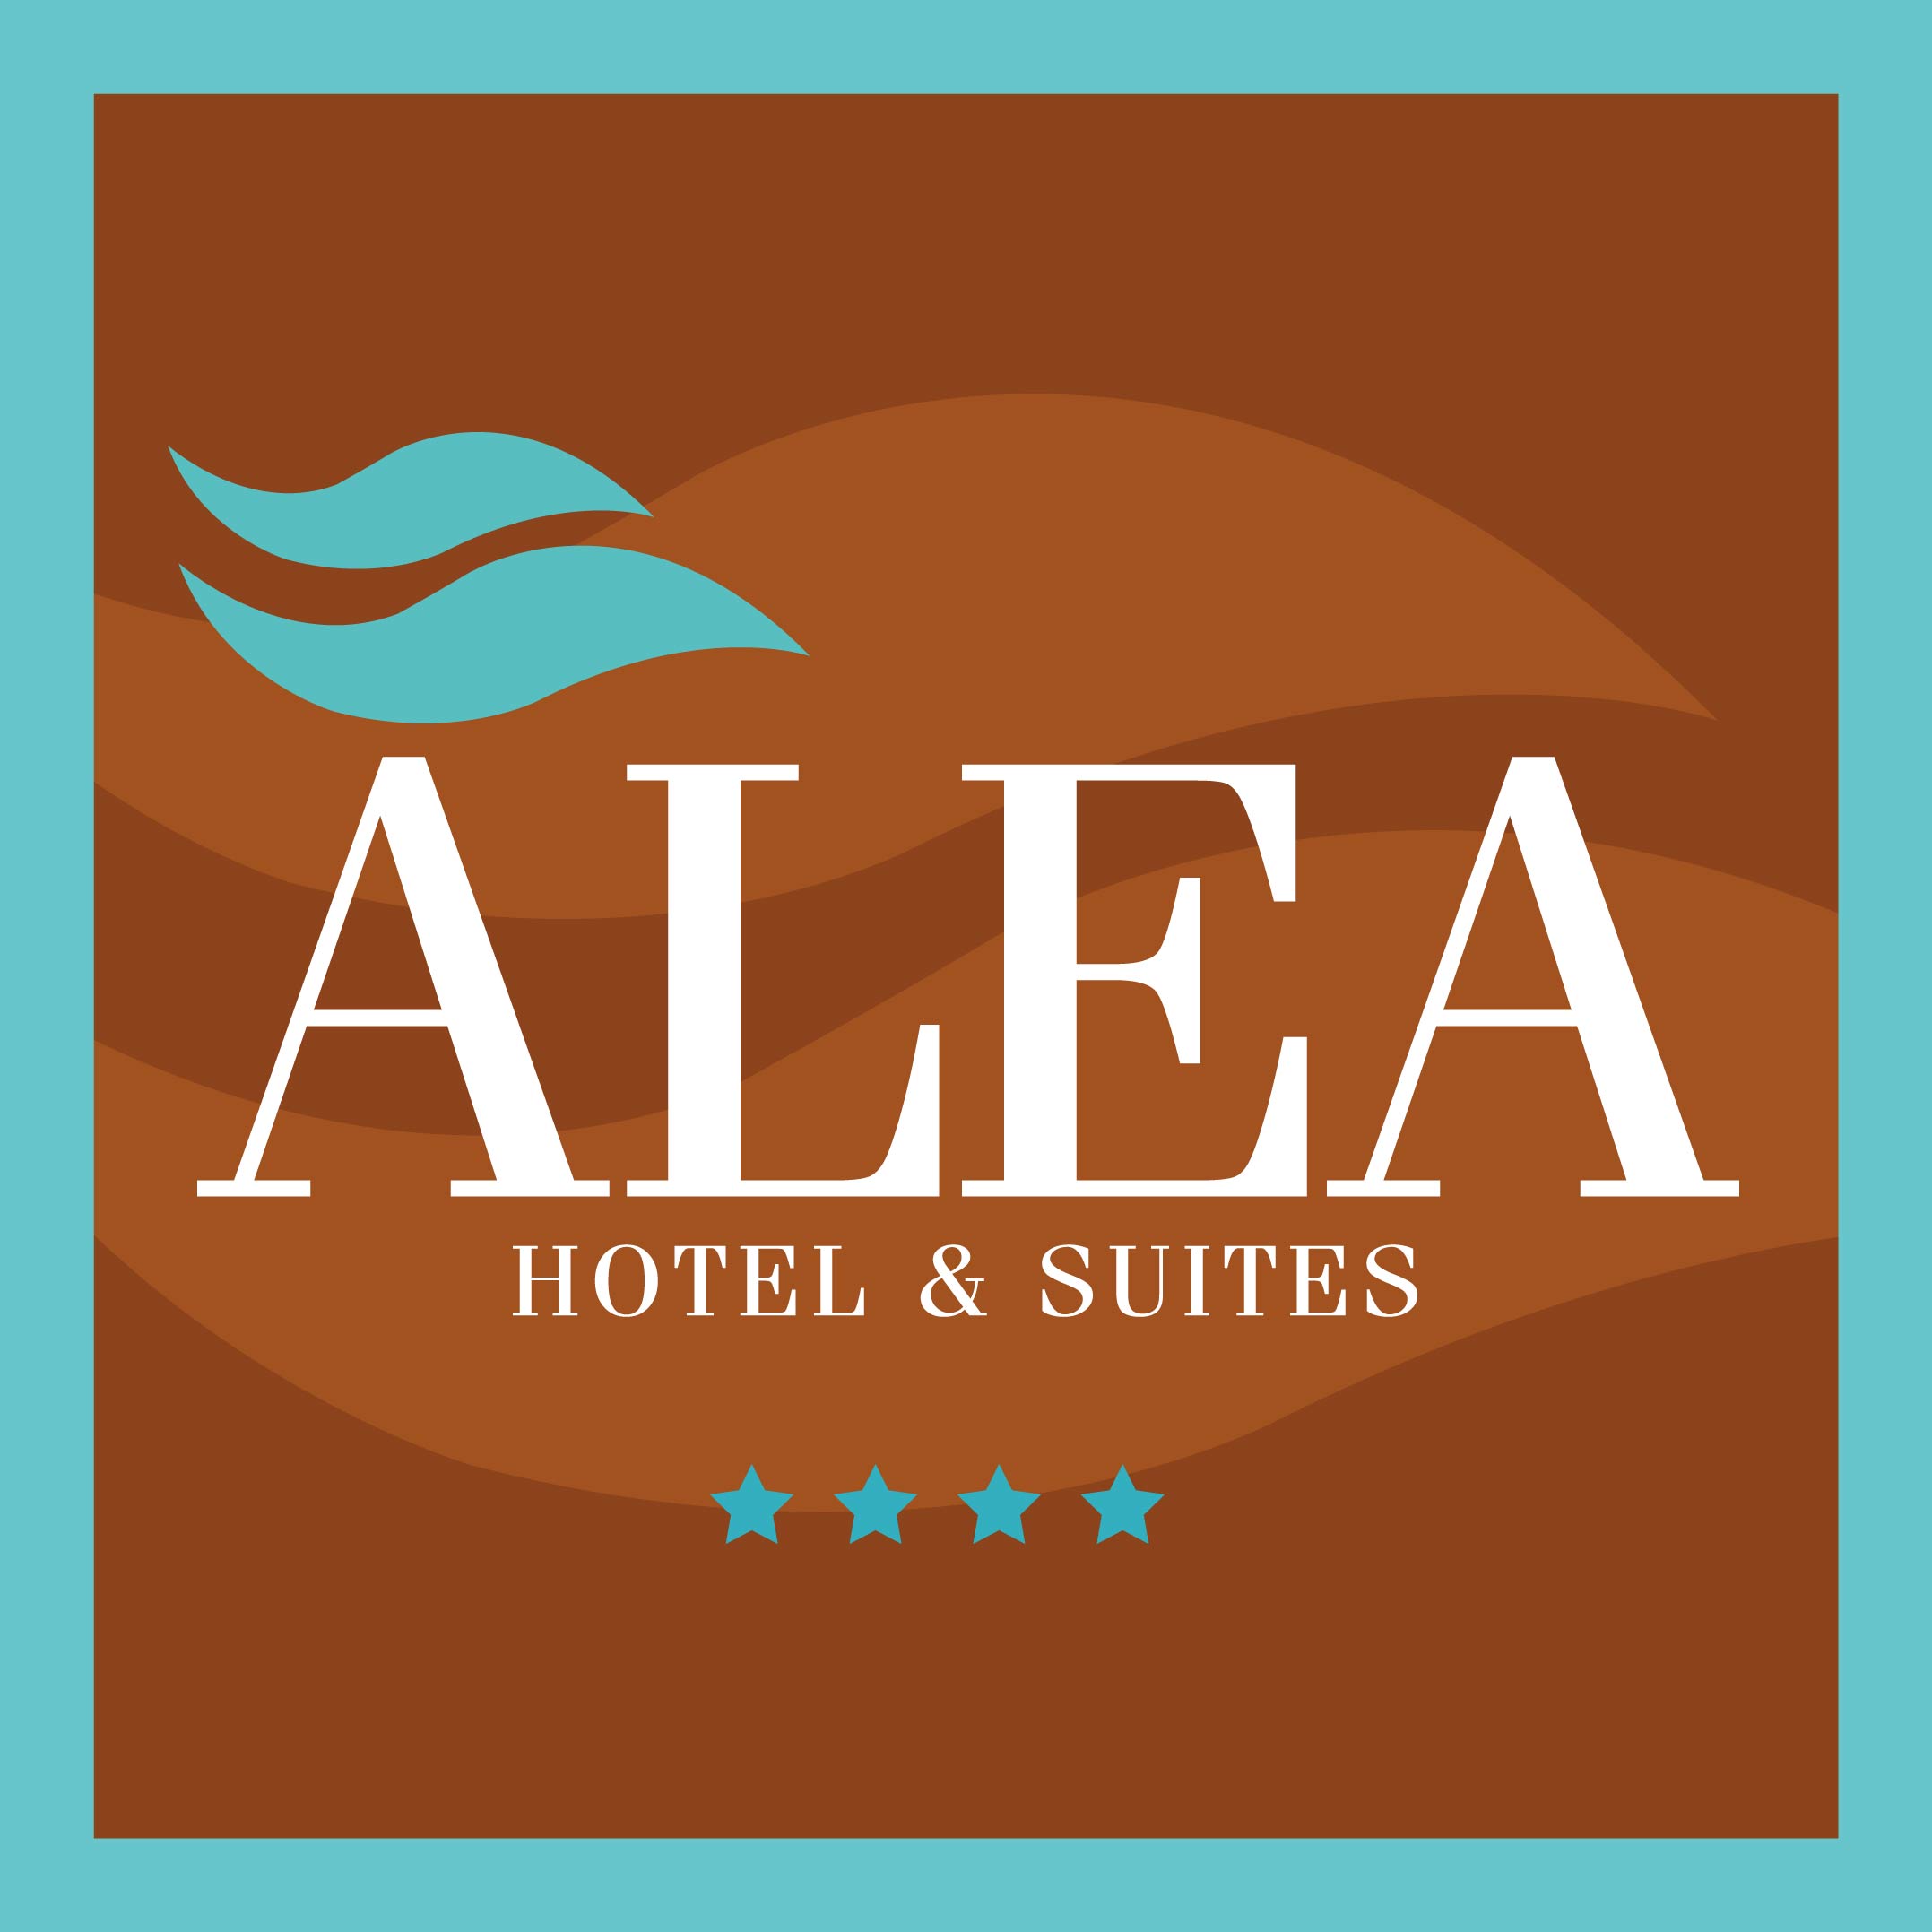 Alea Hotel & Suites 4*+